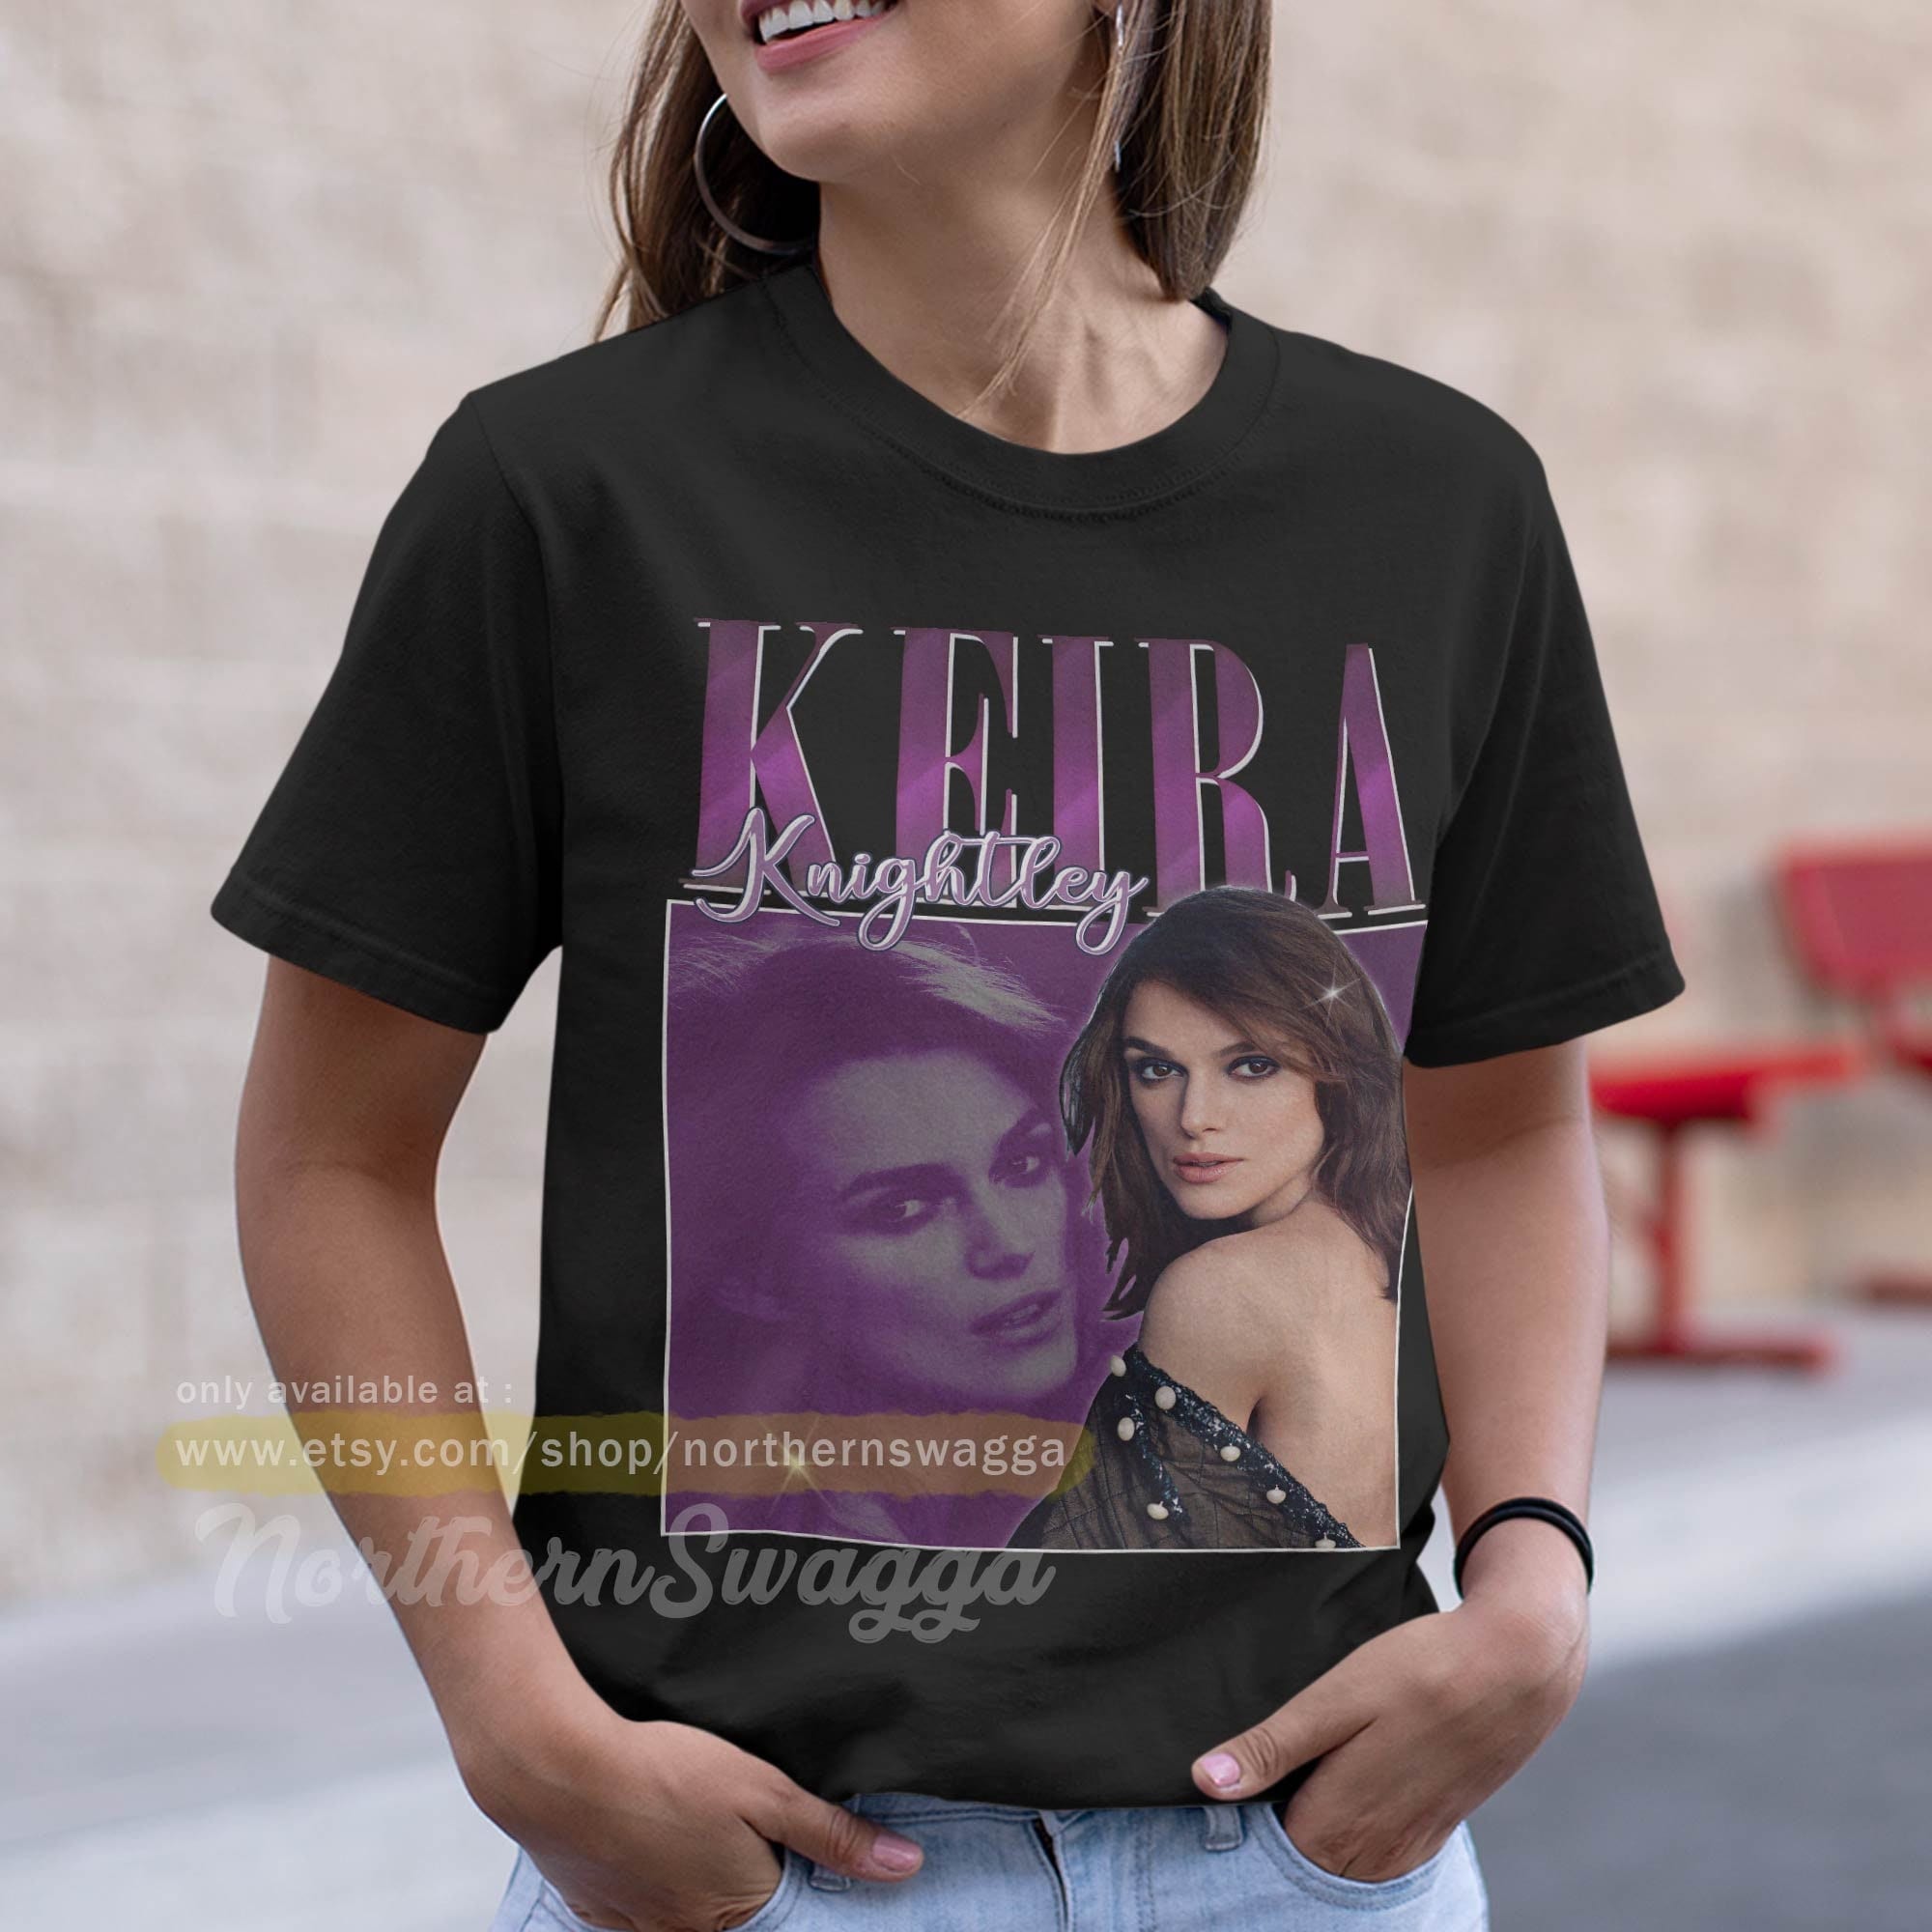 Keira knightley shirt cool fan art t-shirt 90s poster design retro style 180 tee-2